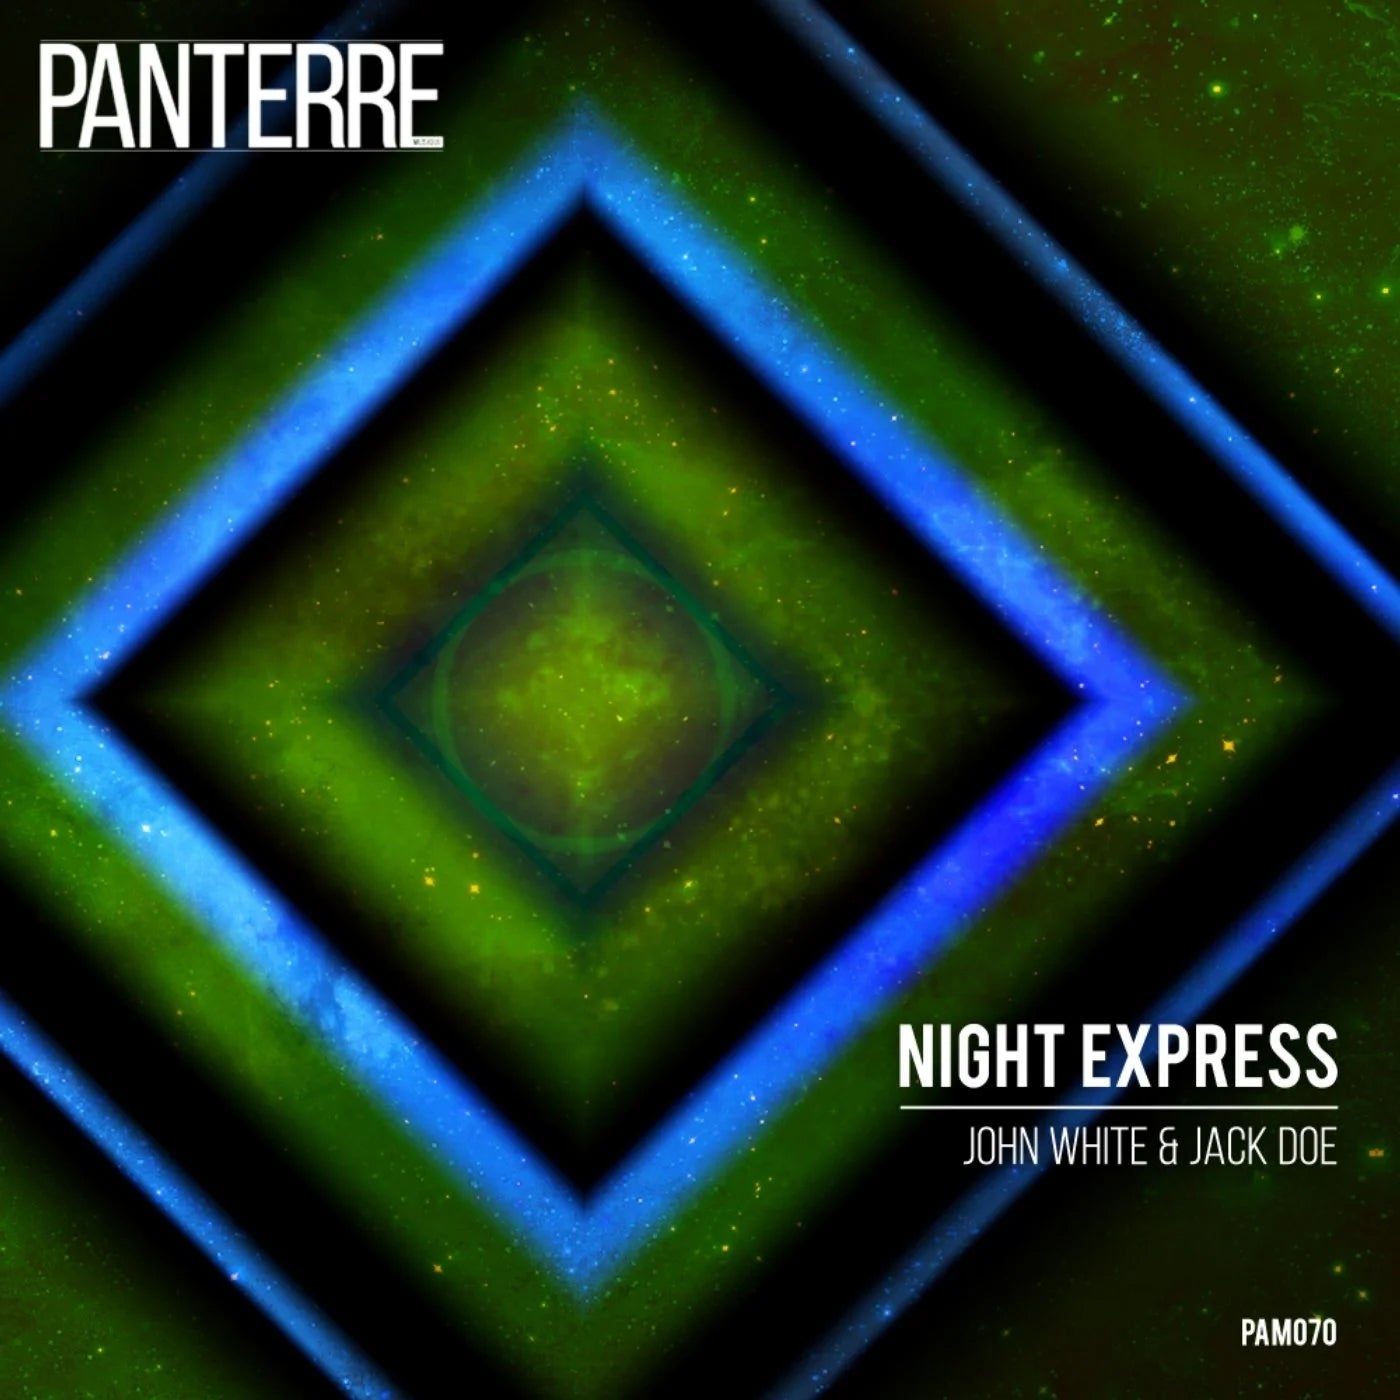 Night Express